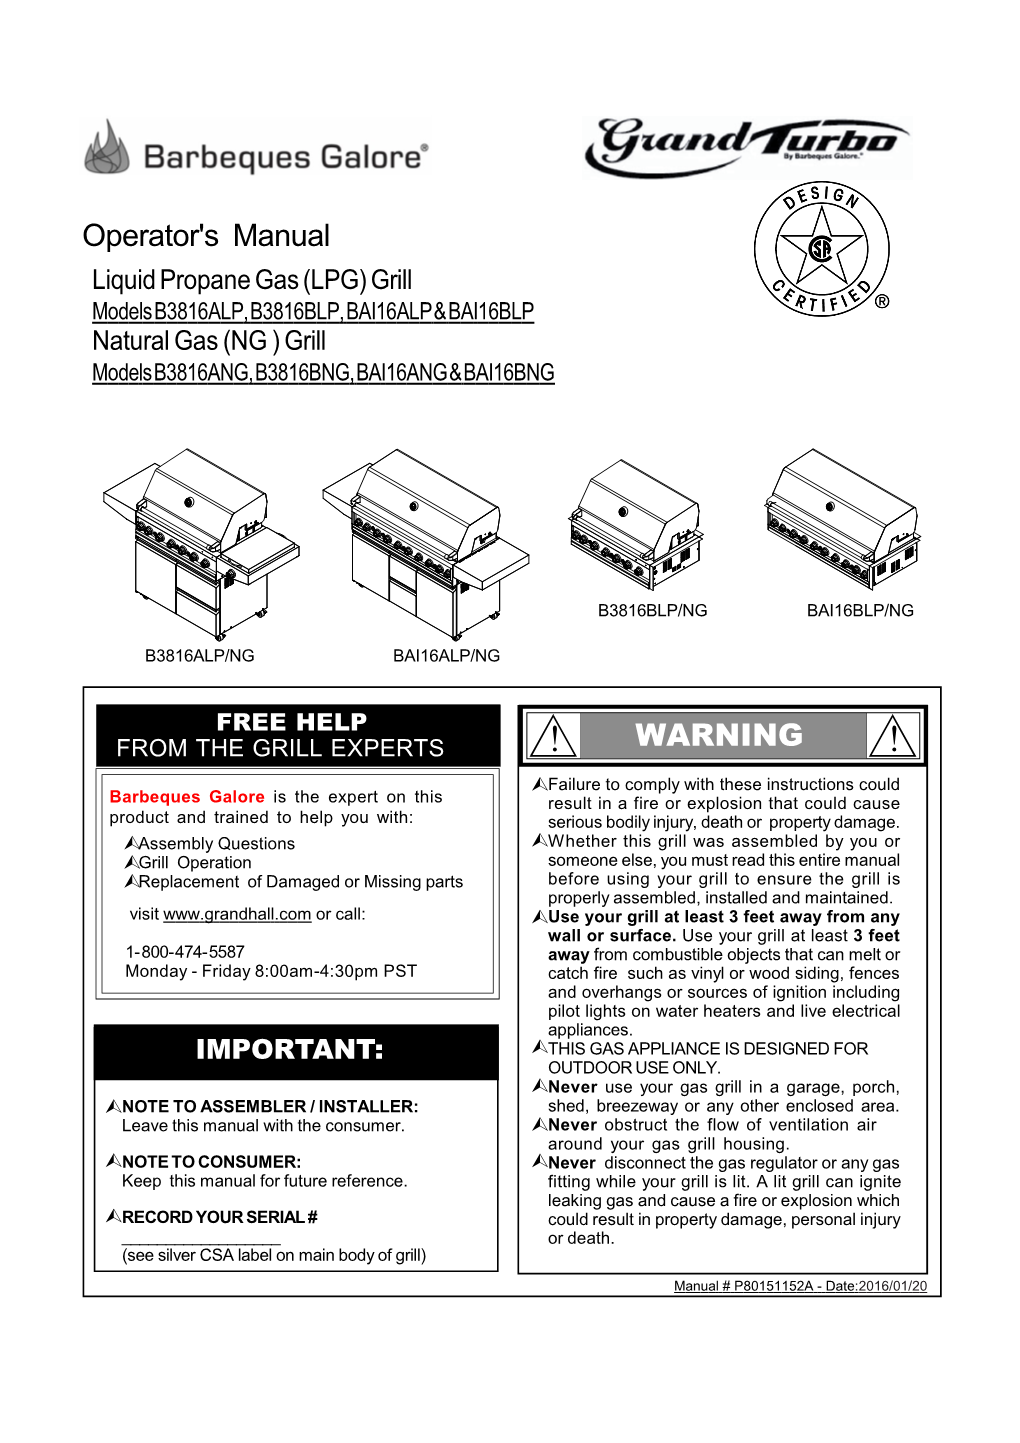 WARNING Operator's Manual